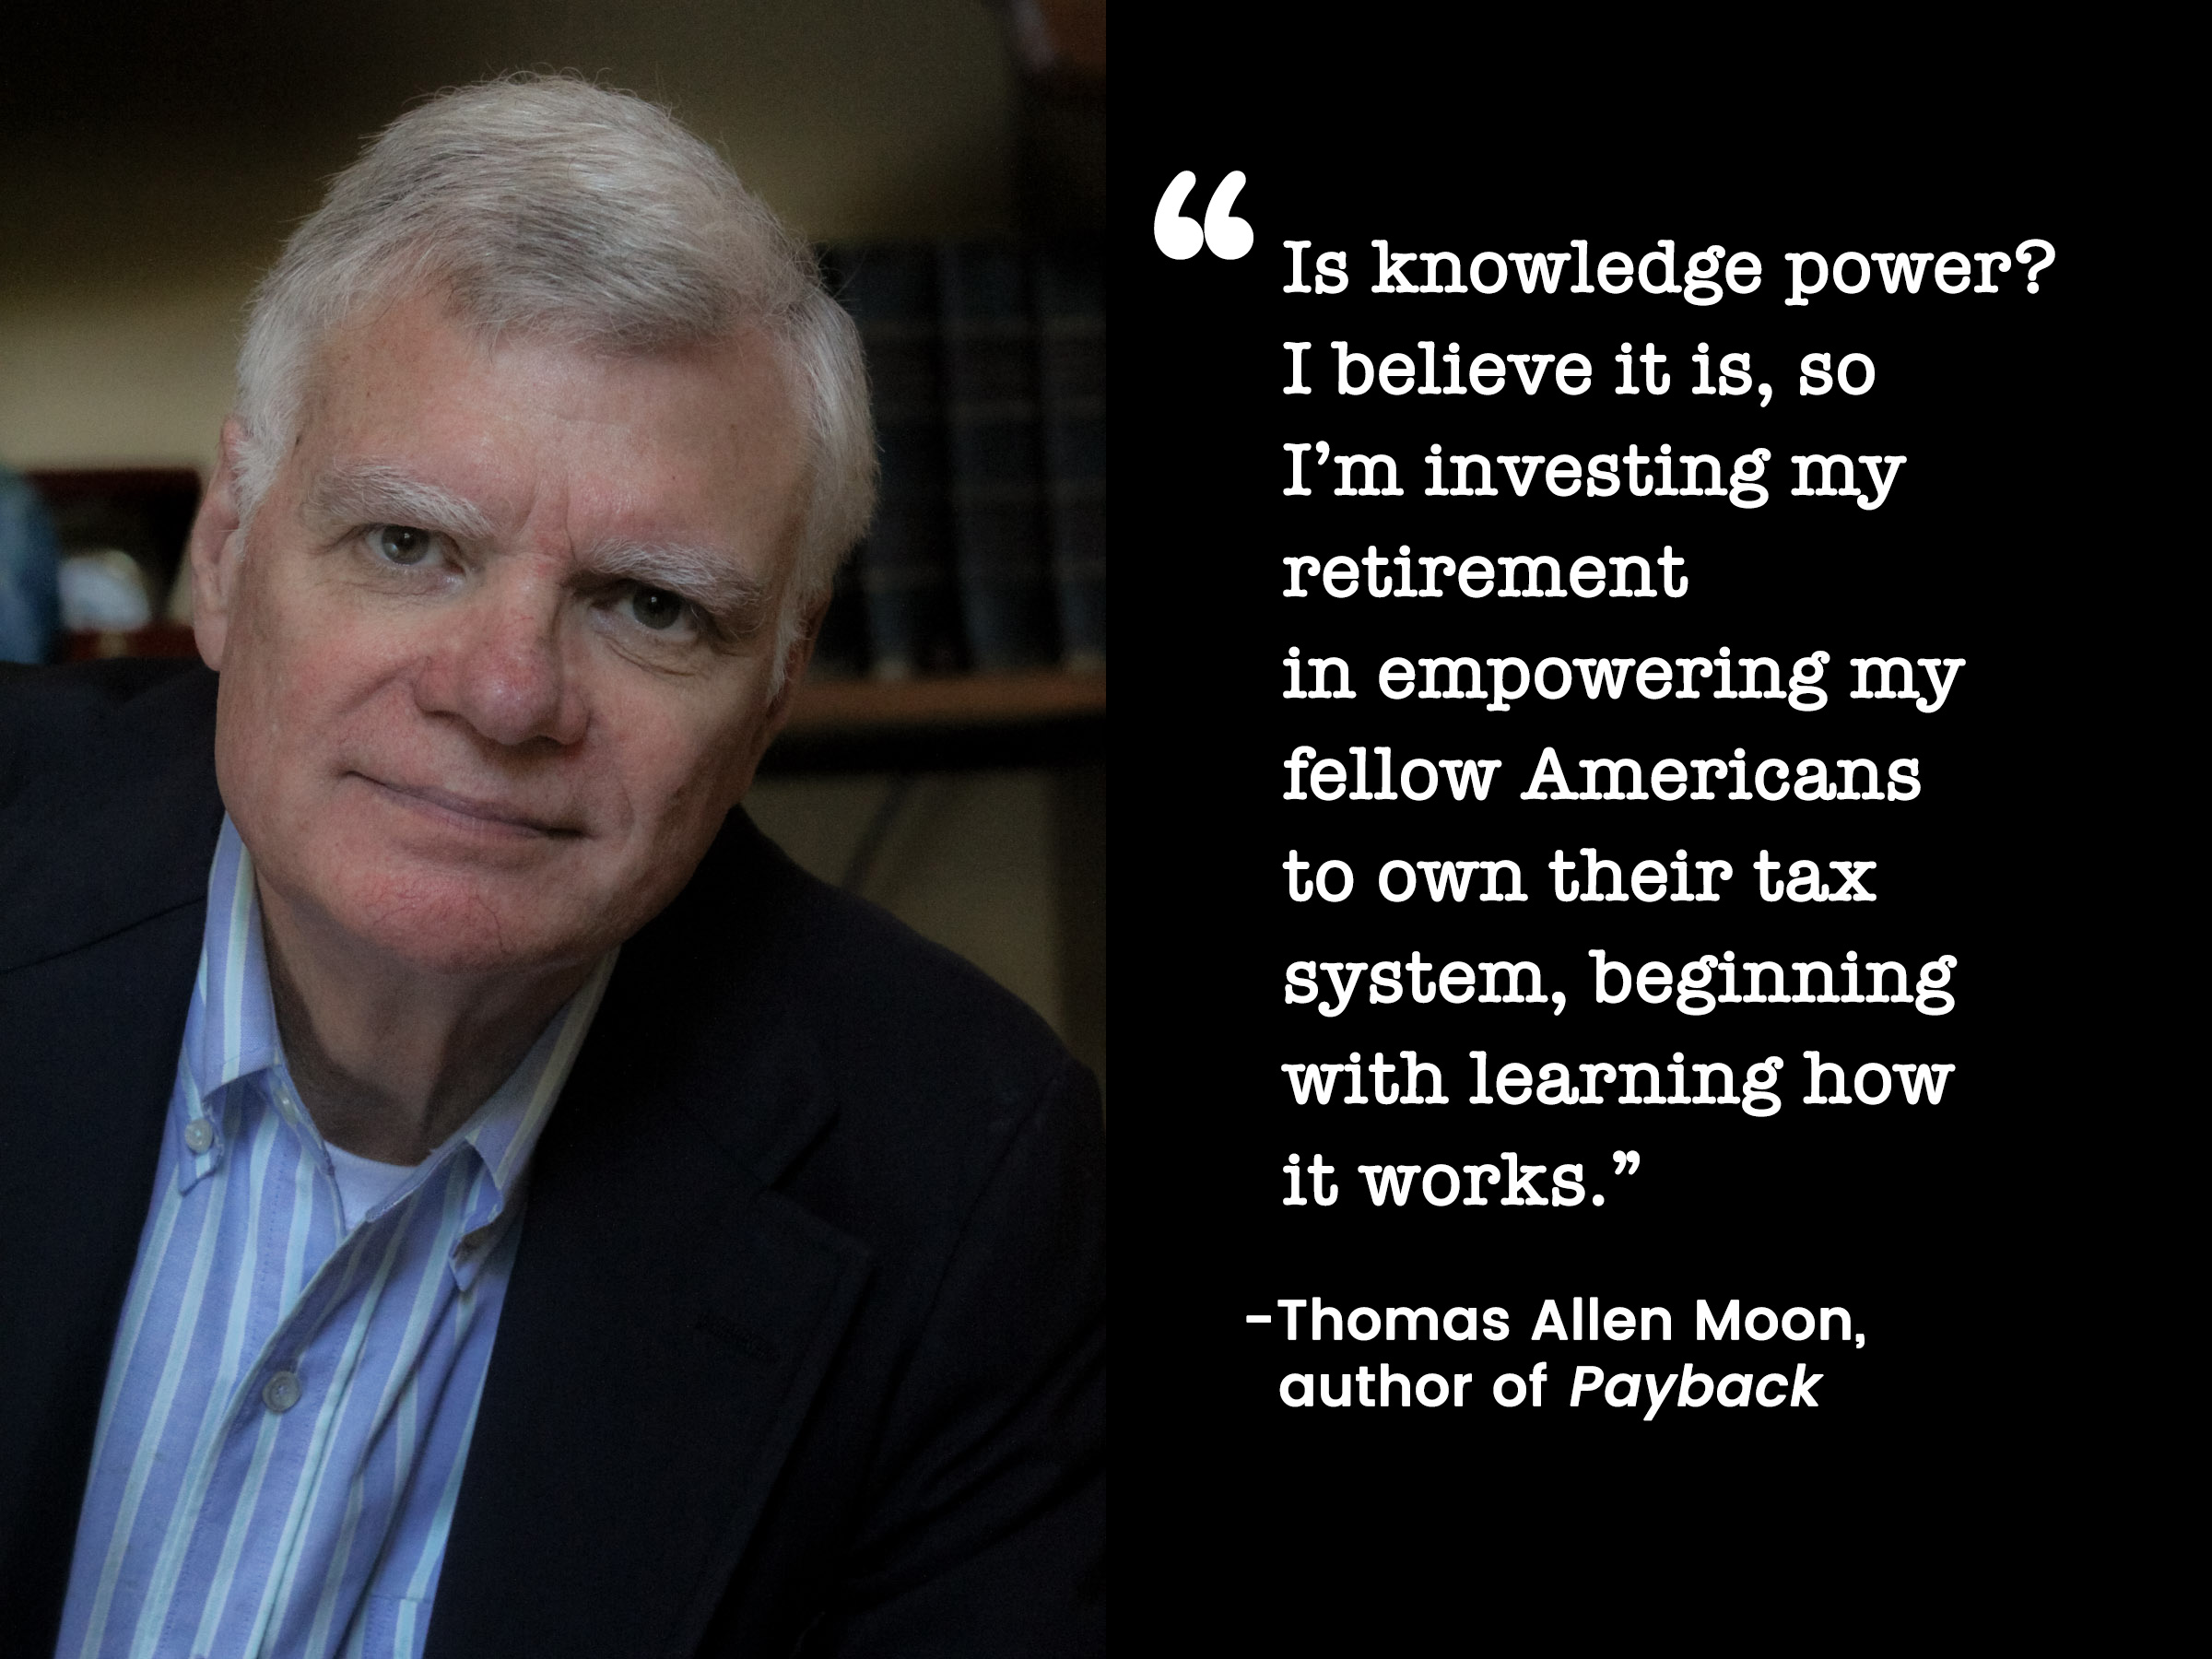 Thomas Allen Moon